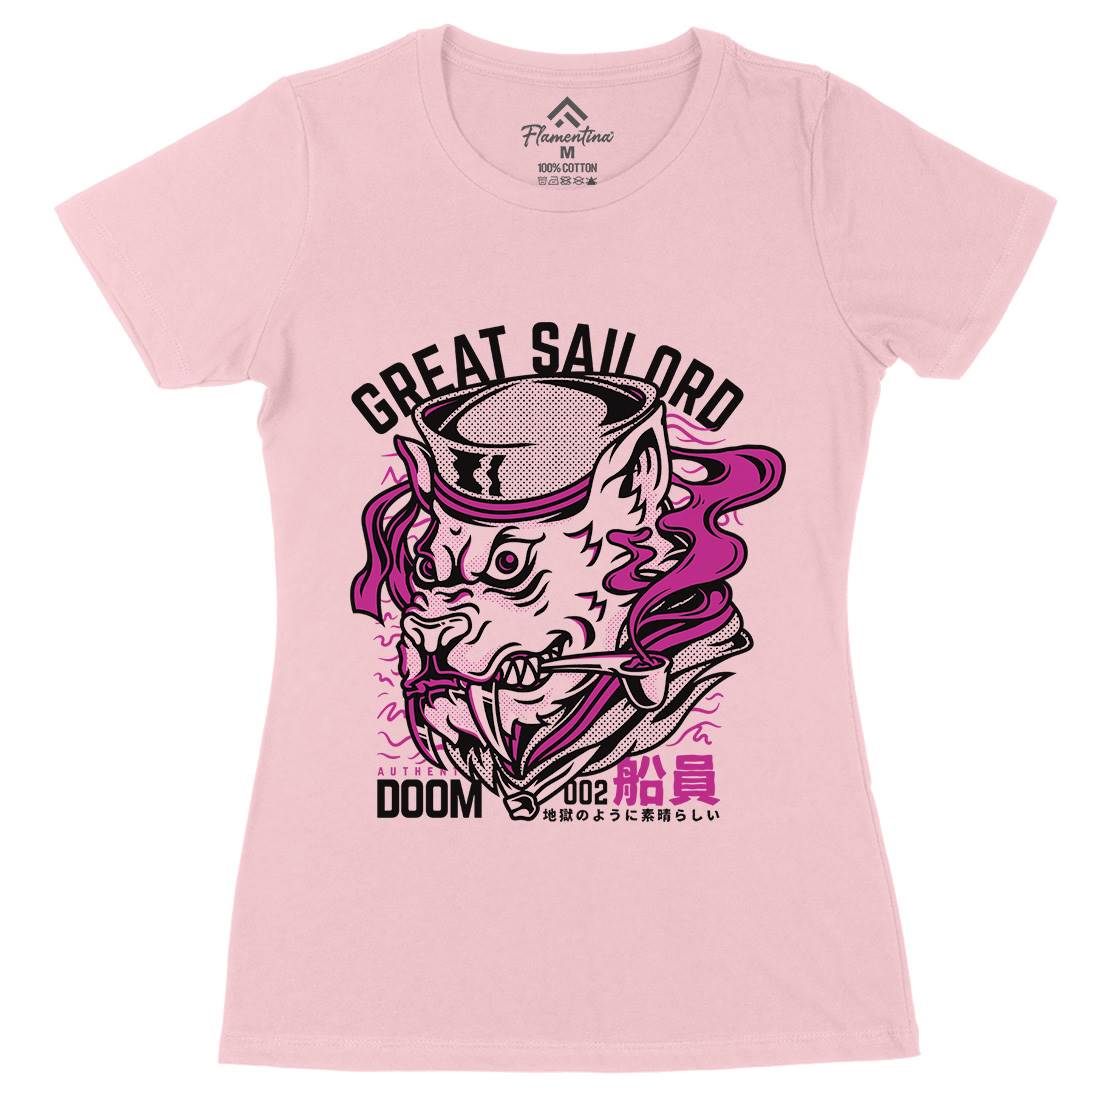 Great Sailord Womens Organic Crew Neck T-Shirt Navy D601